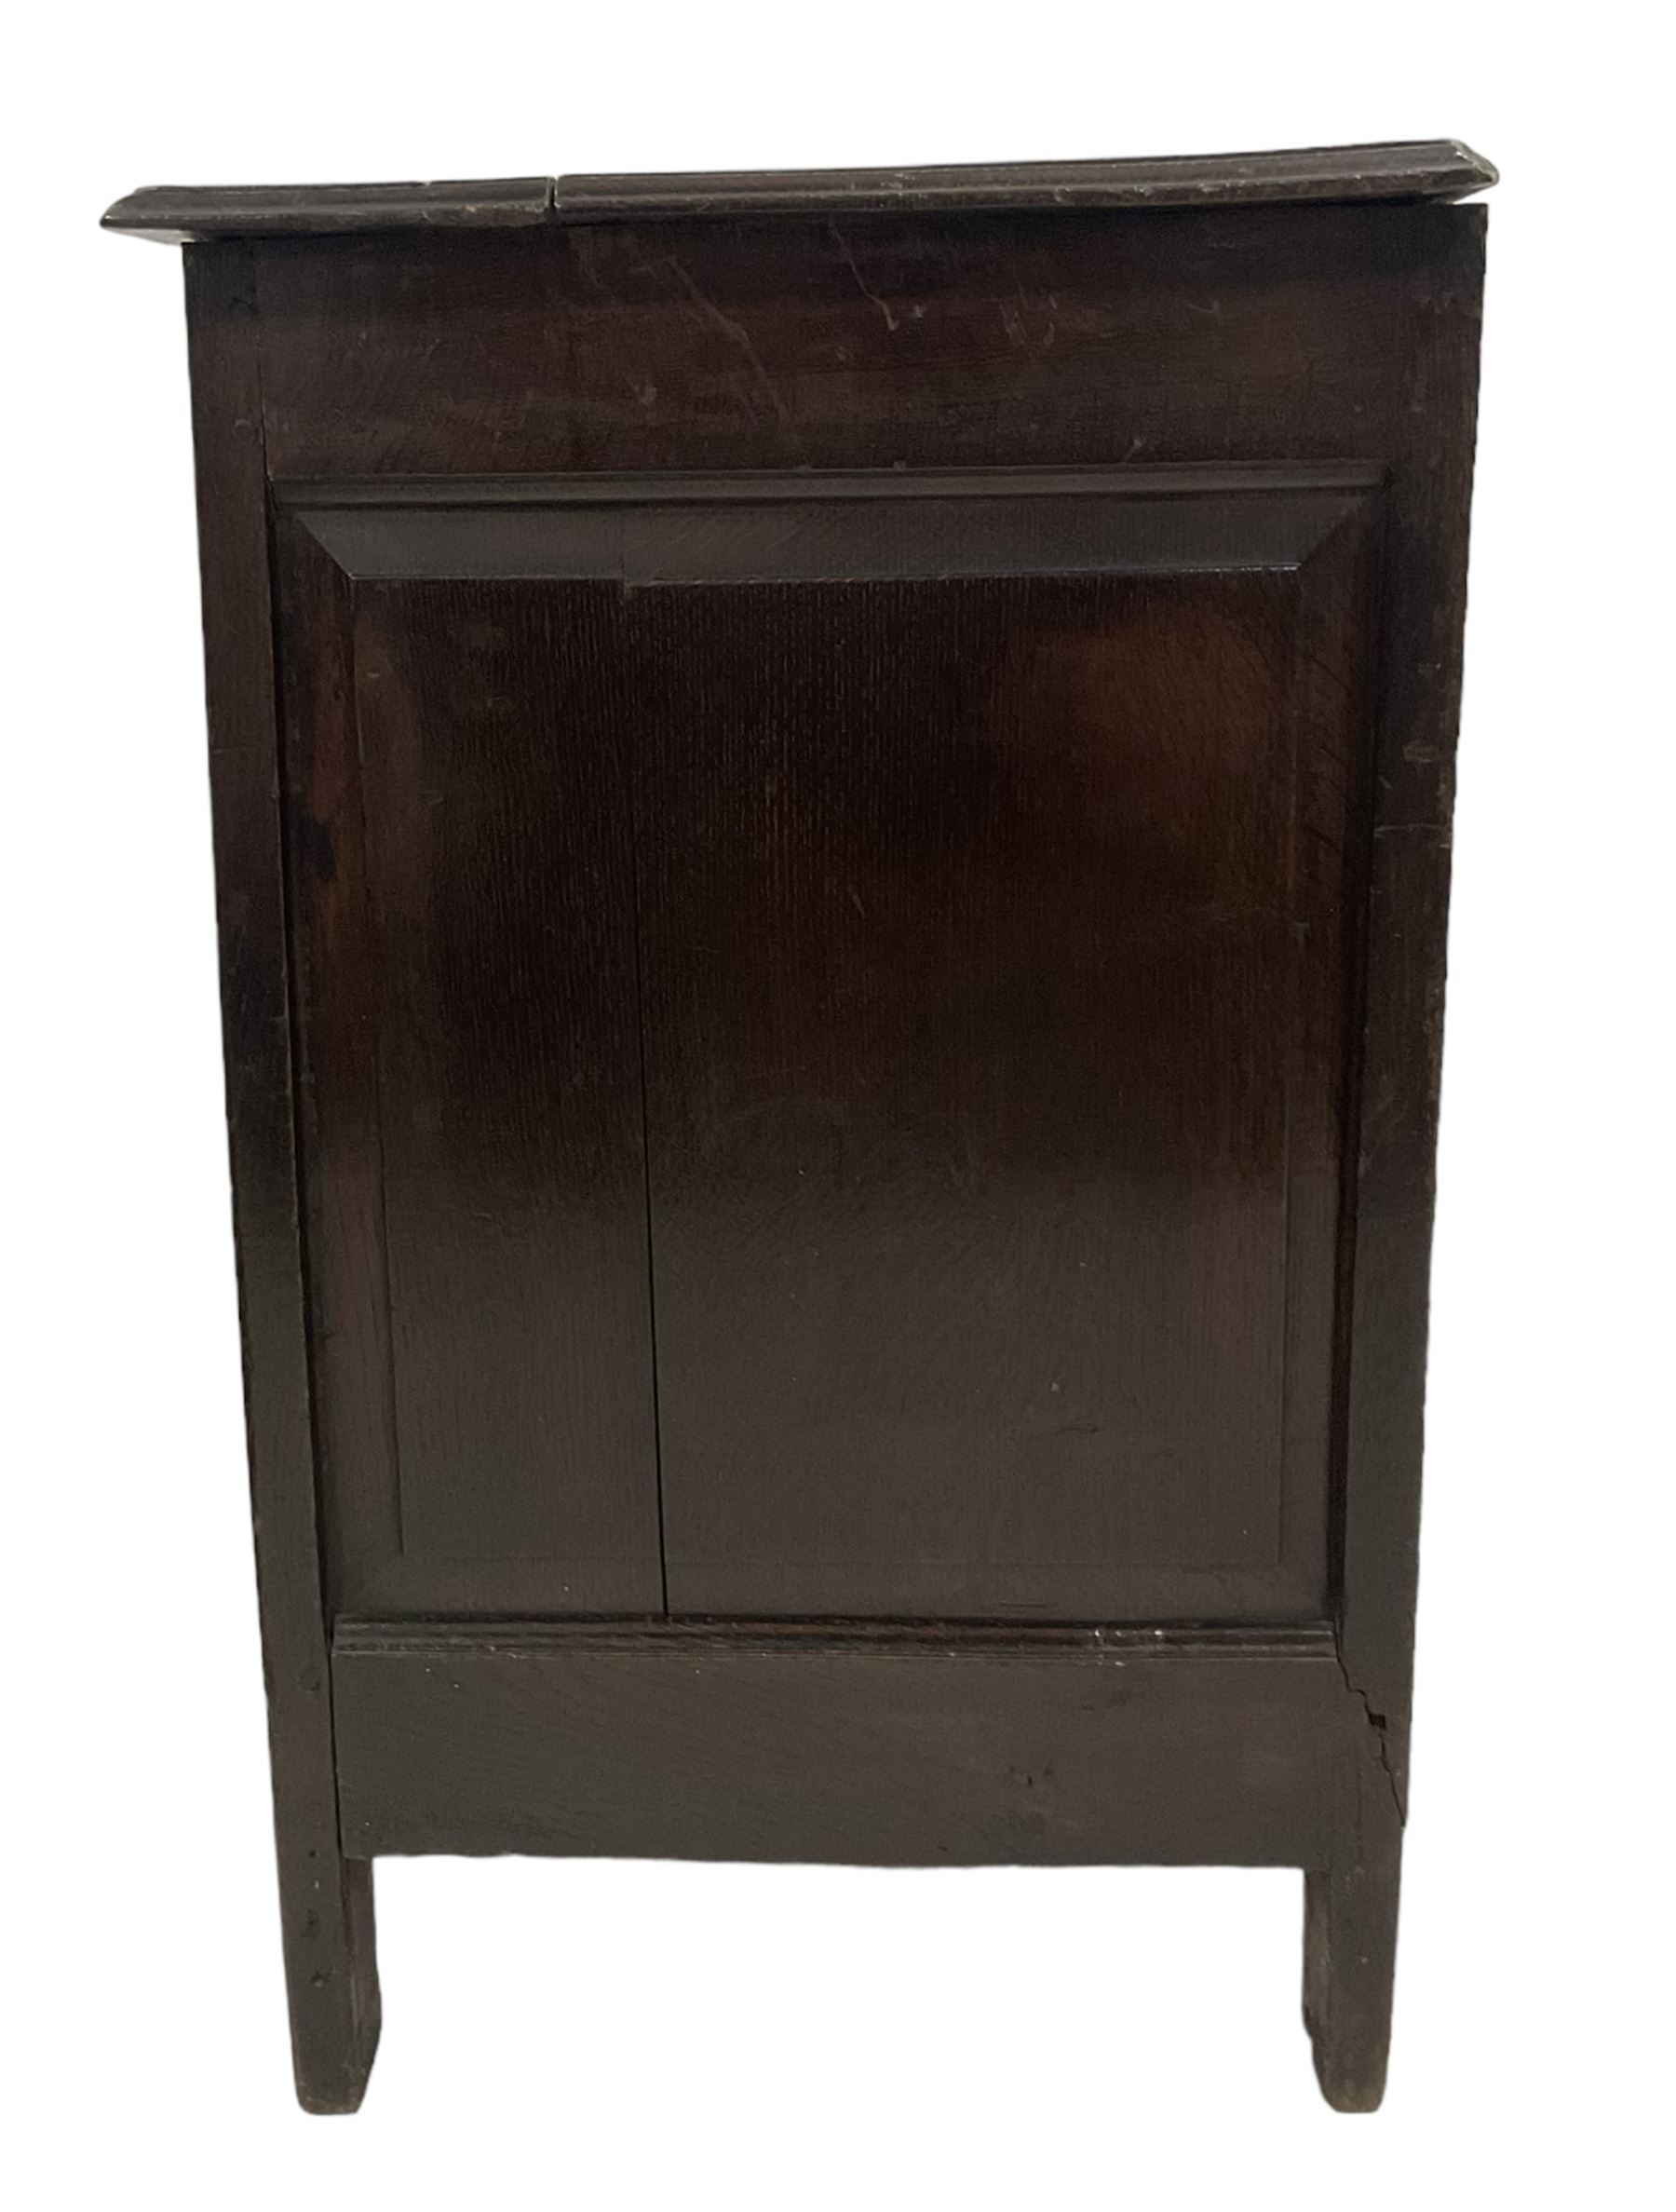 18th century oak dresser base - Image 8 of 9